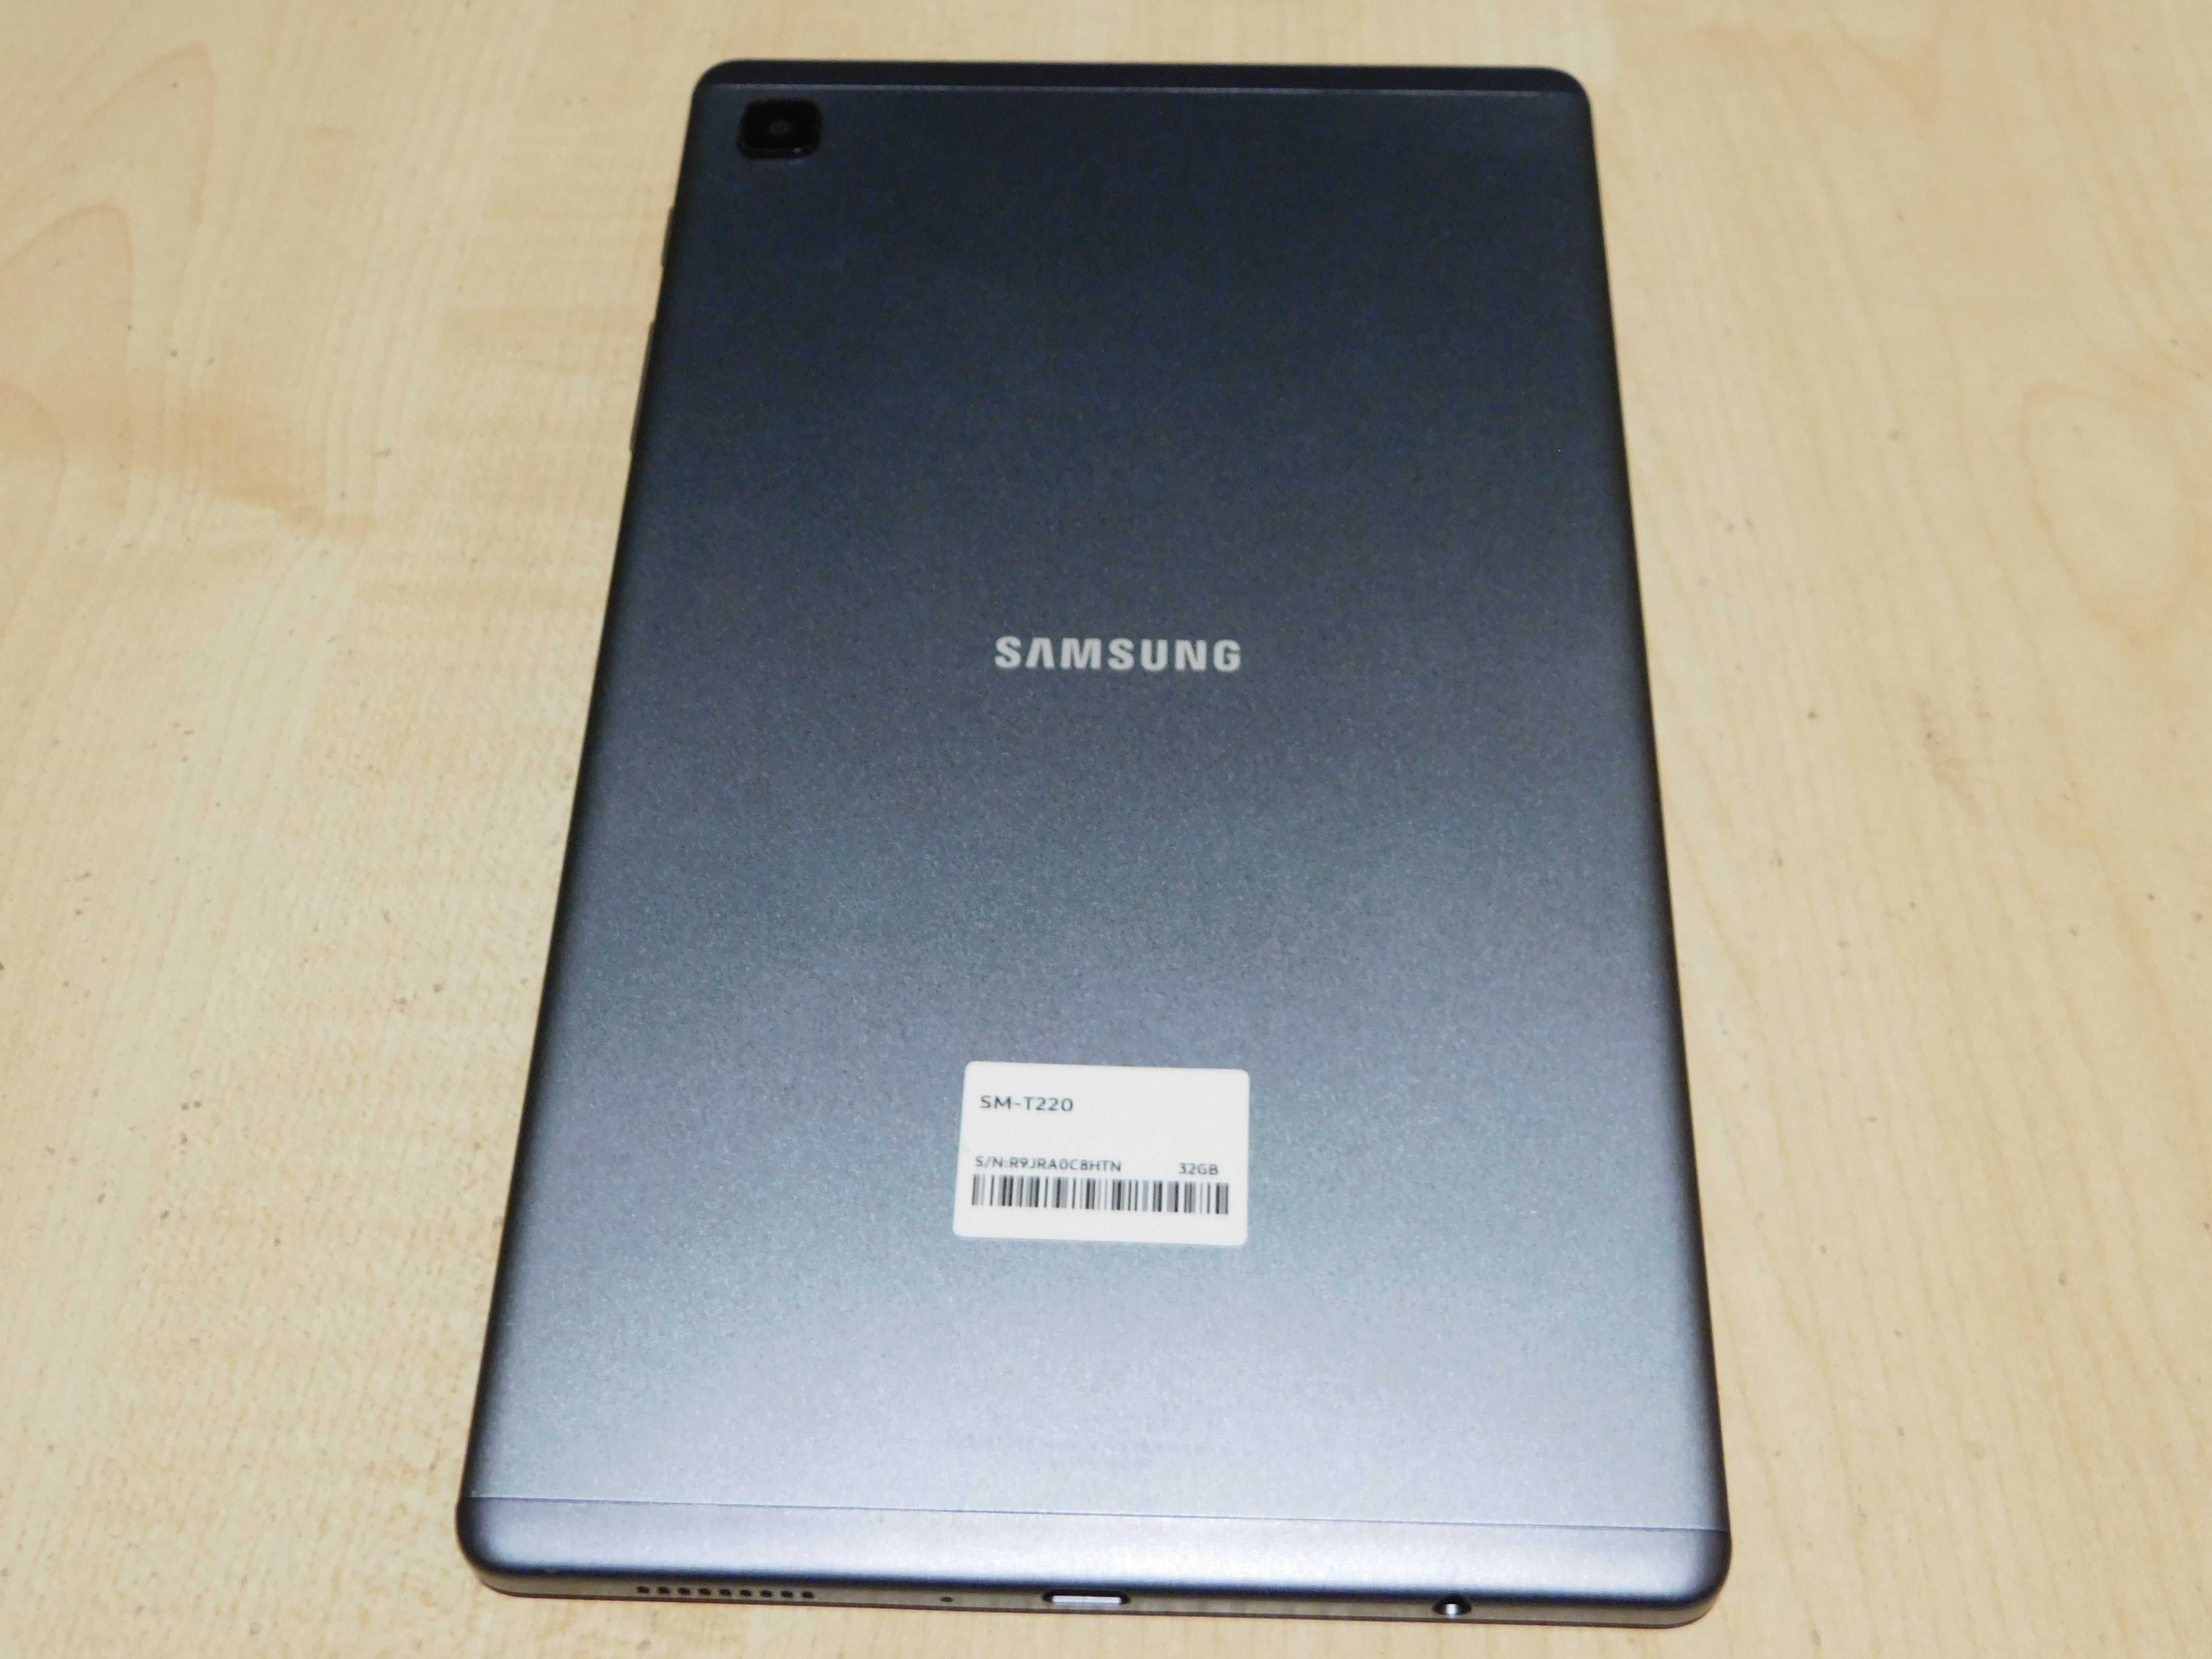 Tablet Samsung Galaxy Tab A7 lite